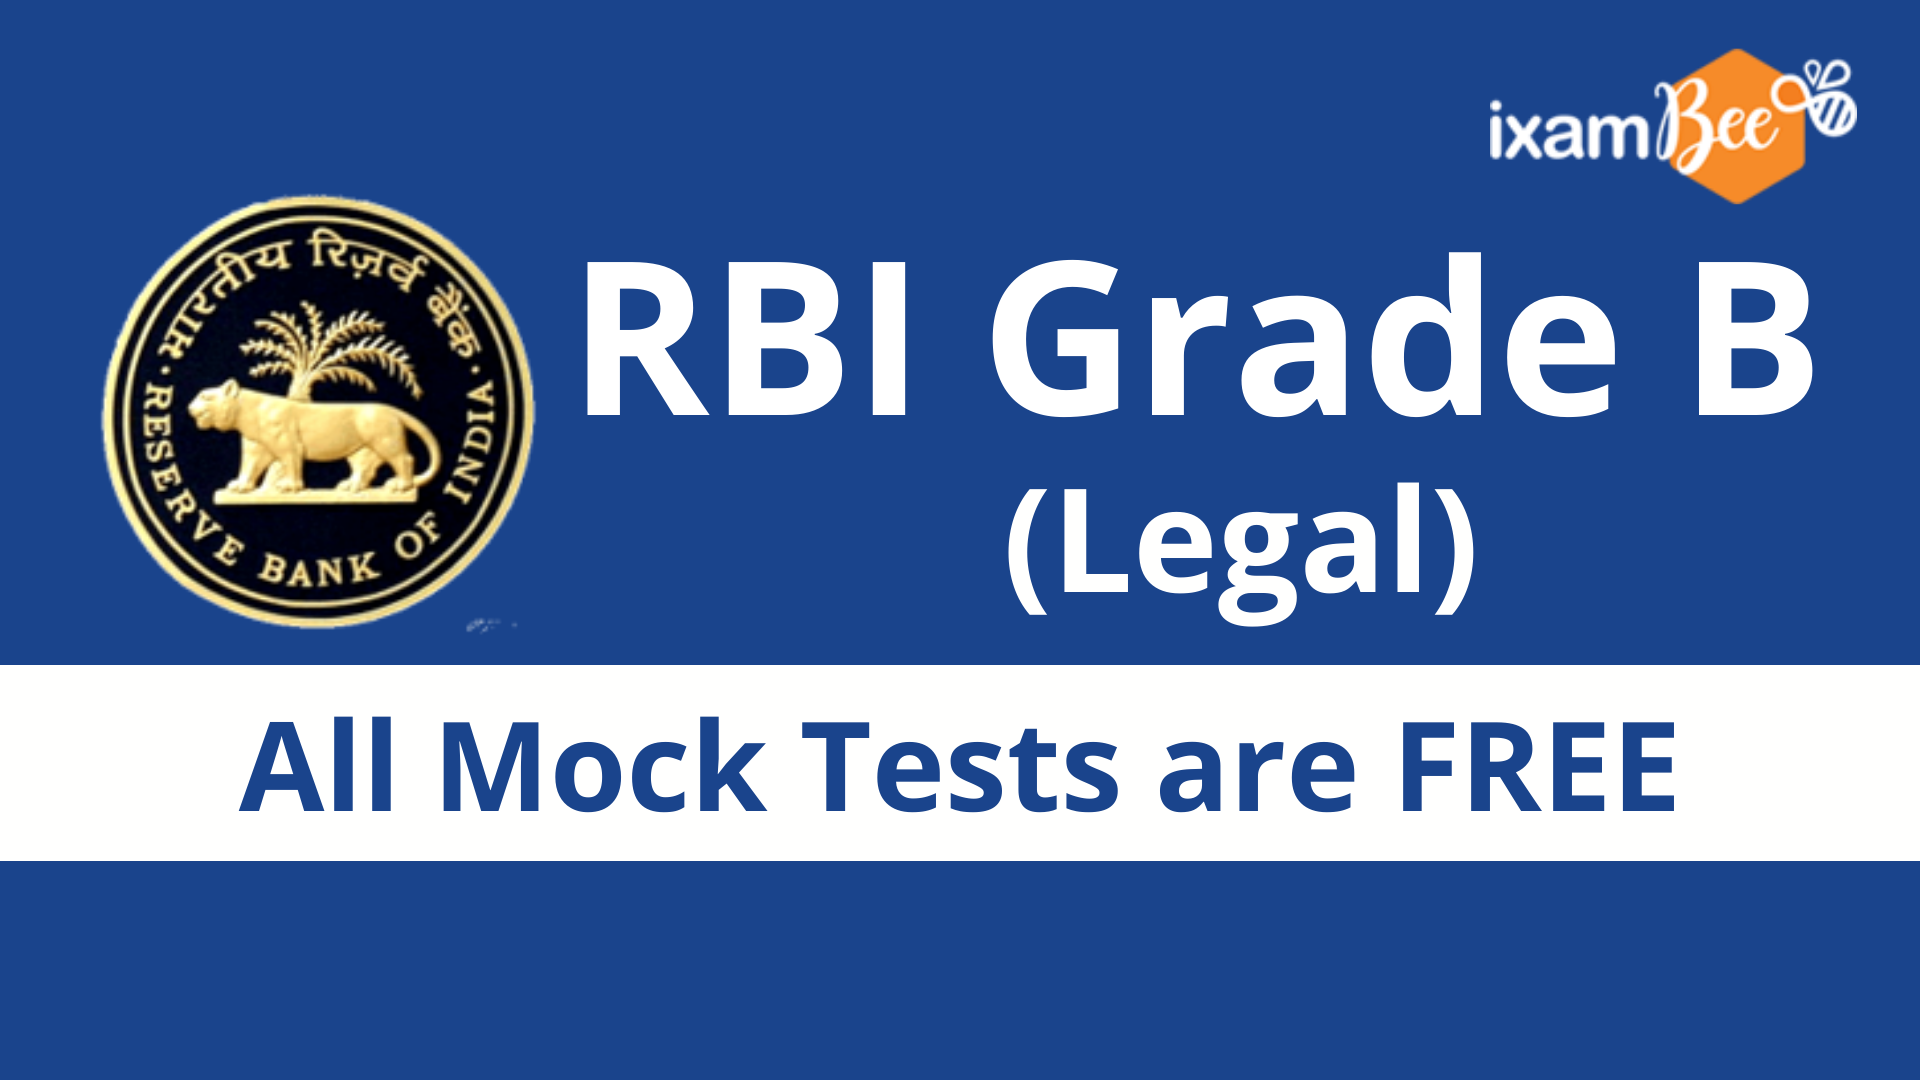 rbi grade b legal